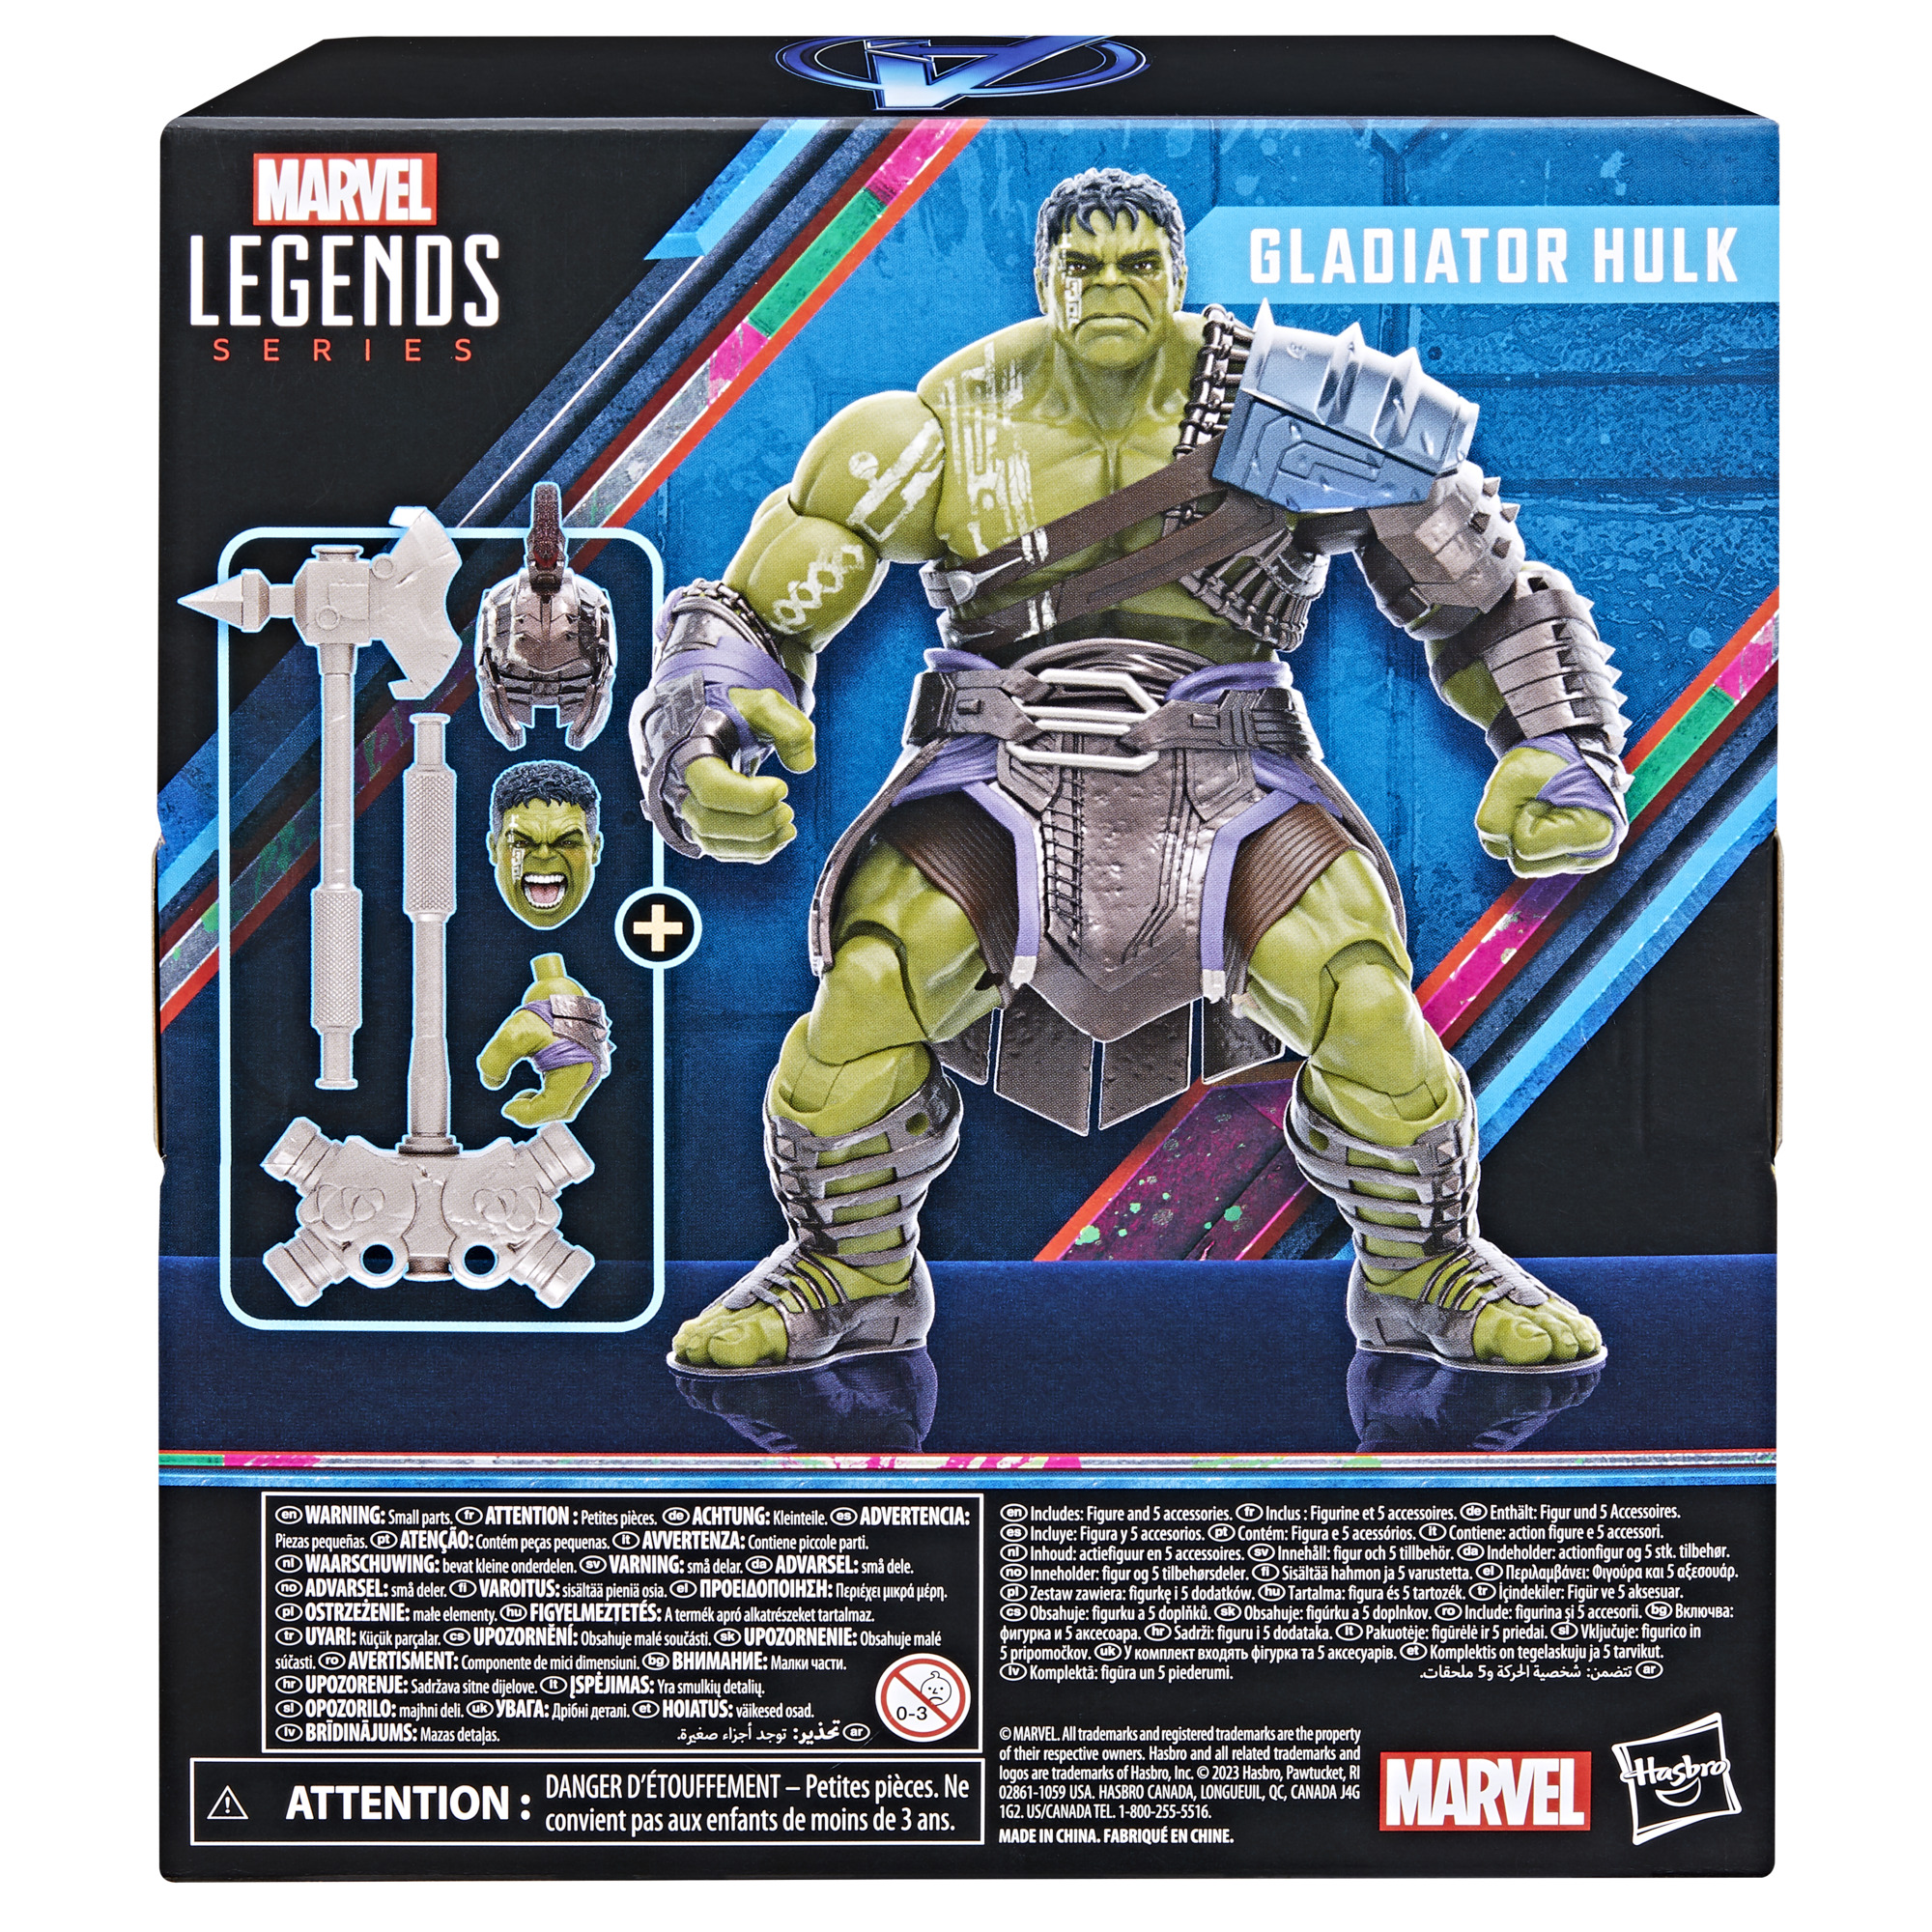 Marvel Legends Gladiator Hulk Series Thor 6-Inch Action Figure